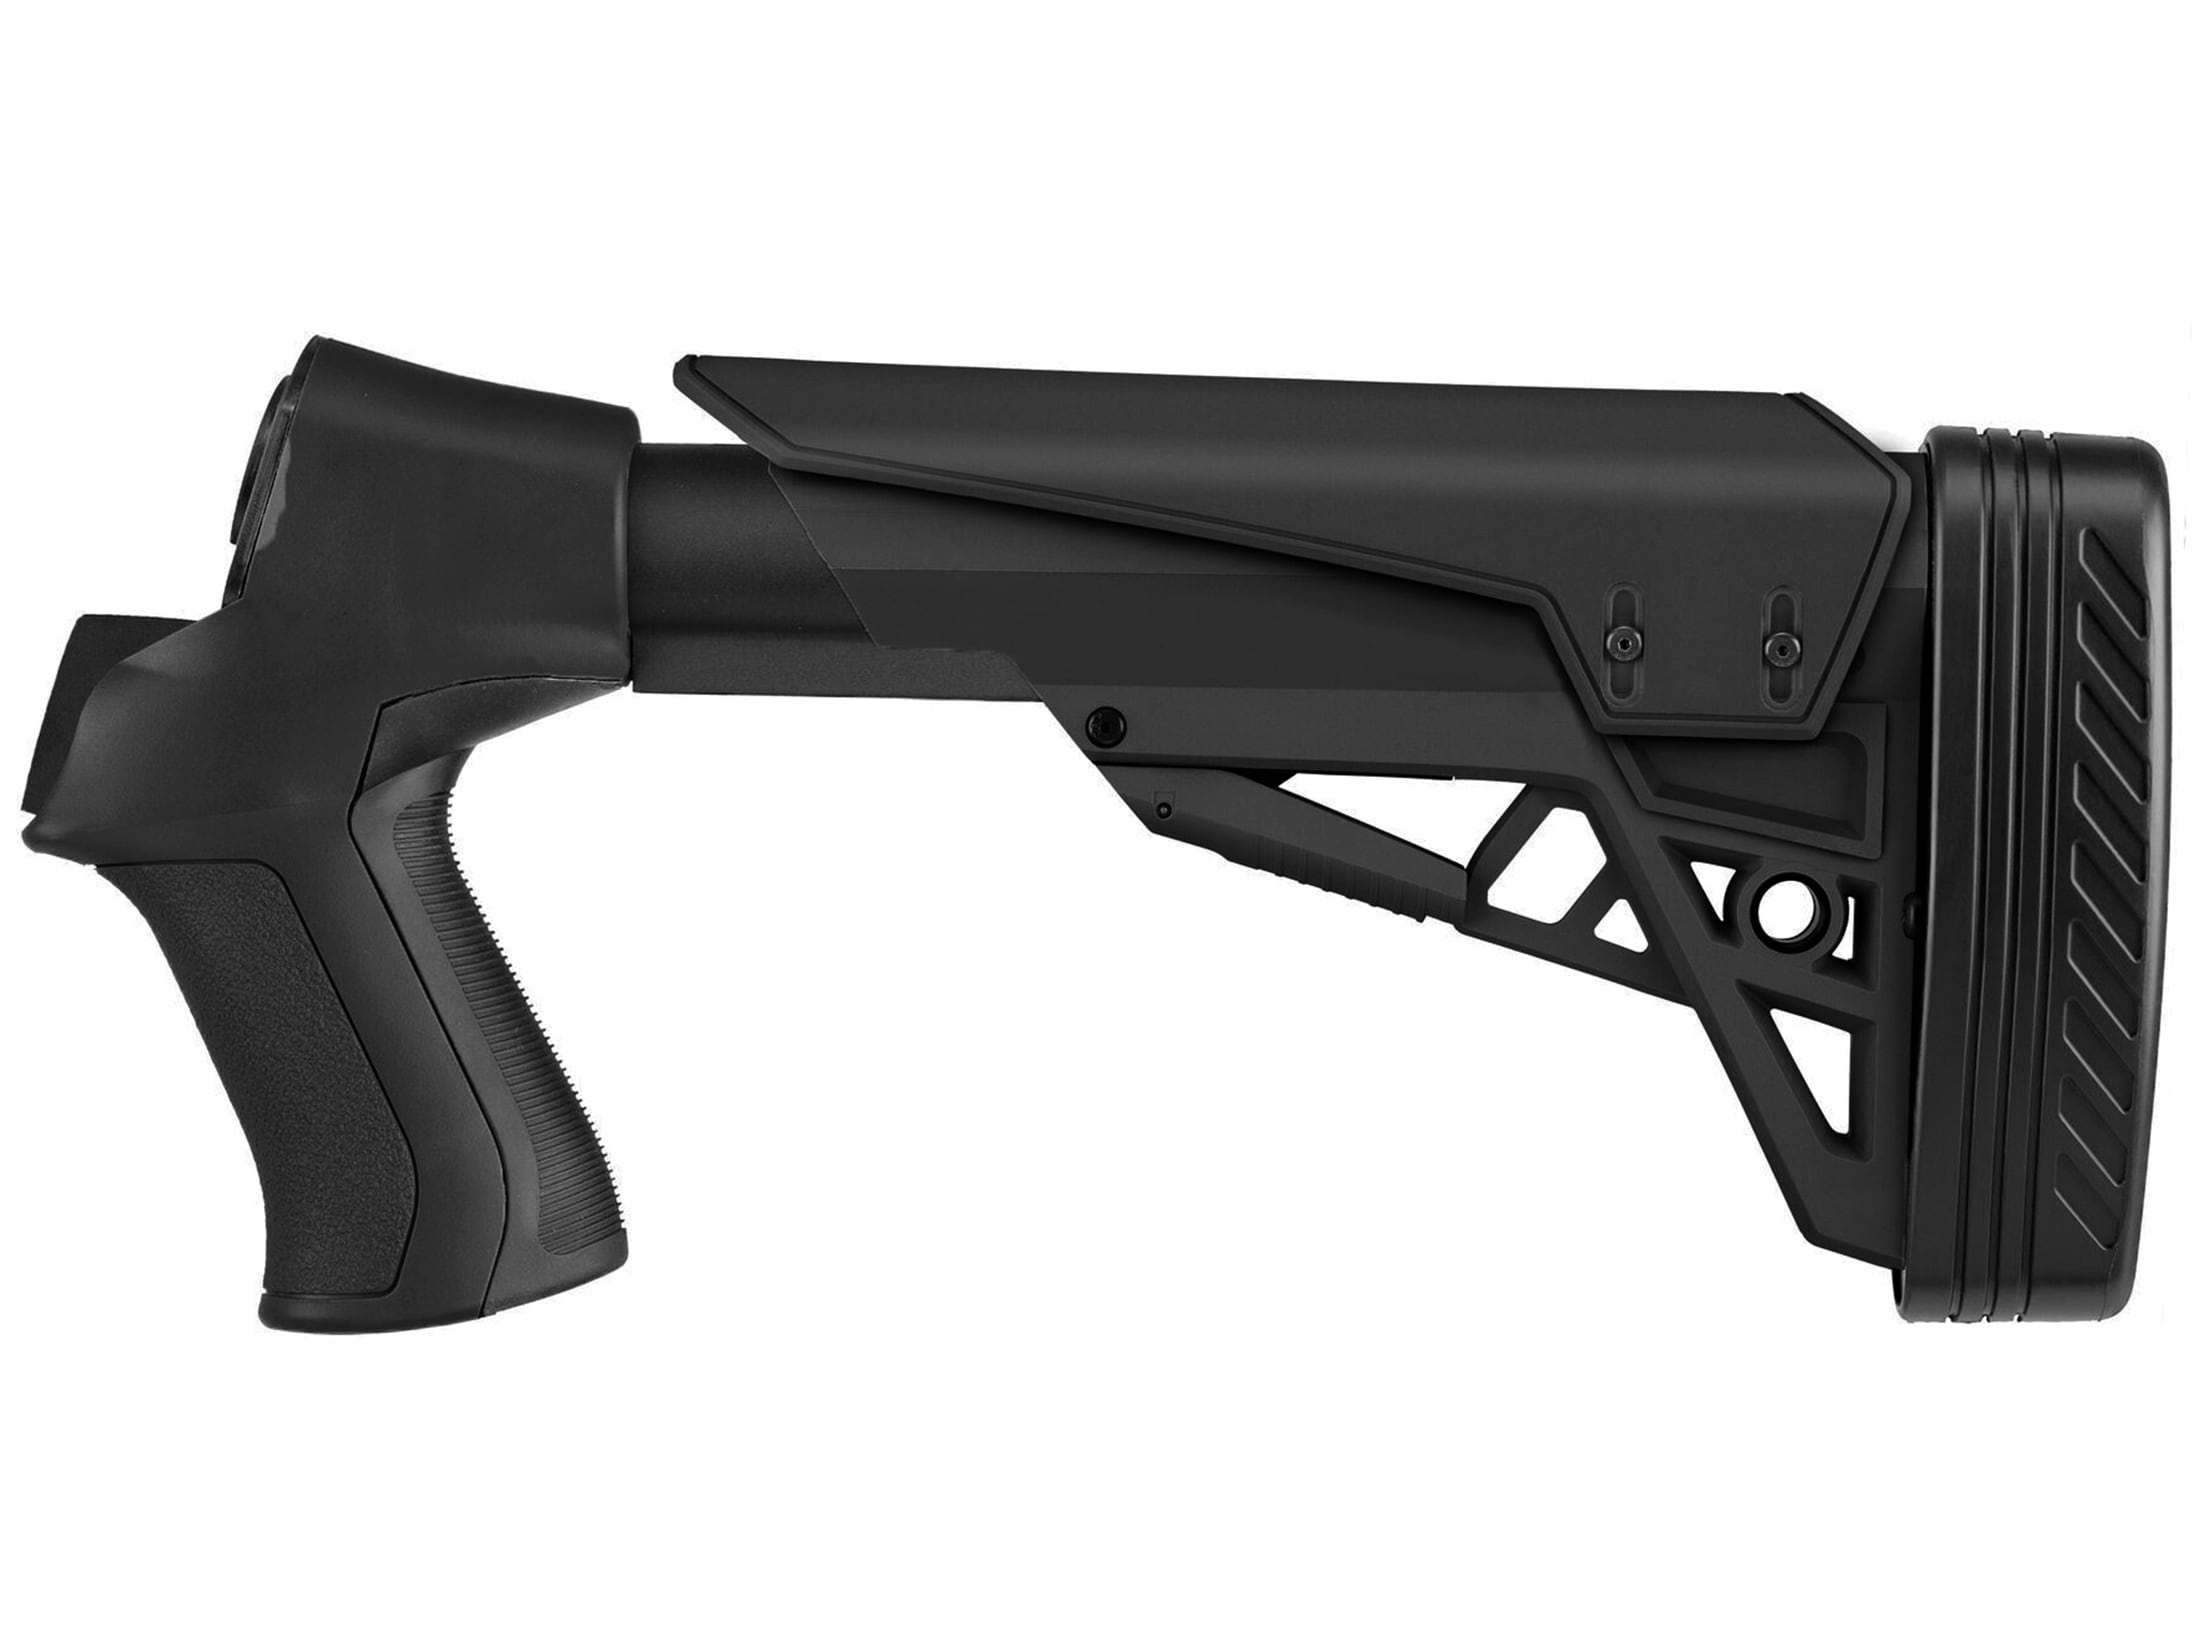 ATI Pistol Grip TOP FOLDING Stock Heat Shield Mossberg 500 Shotgun 590 835 